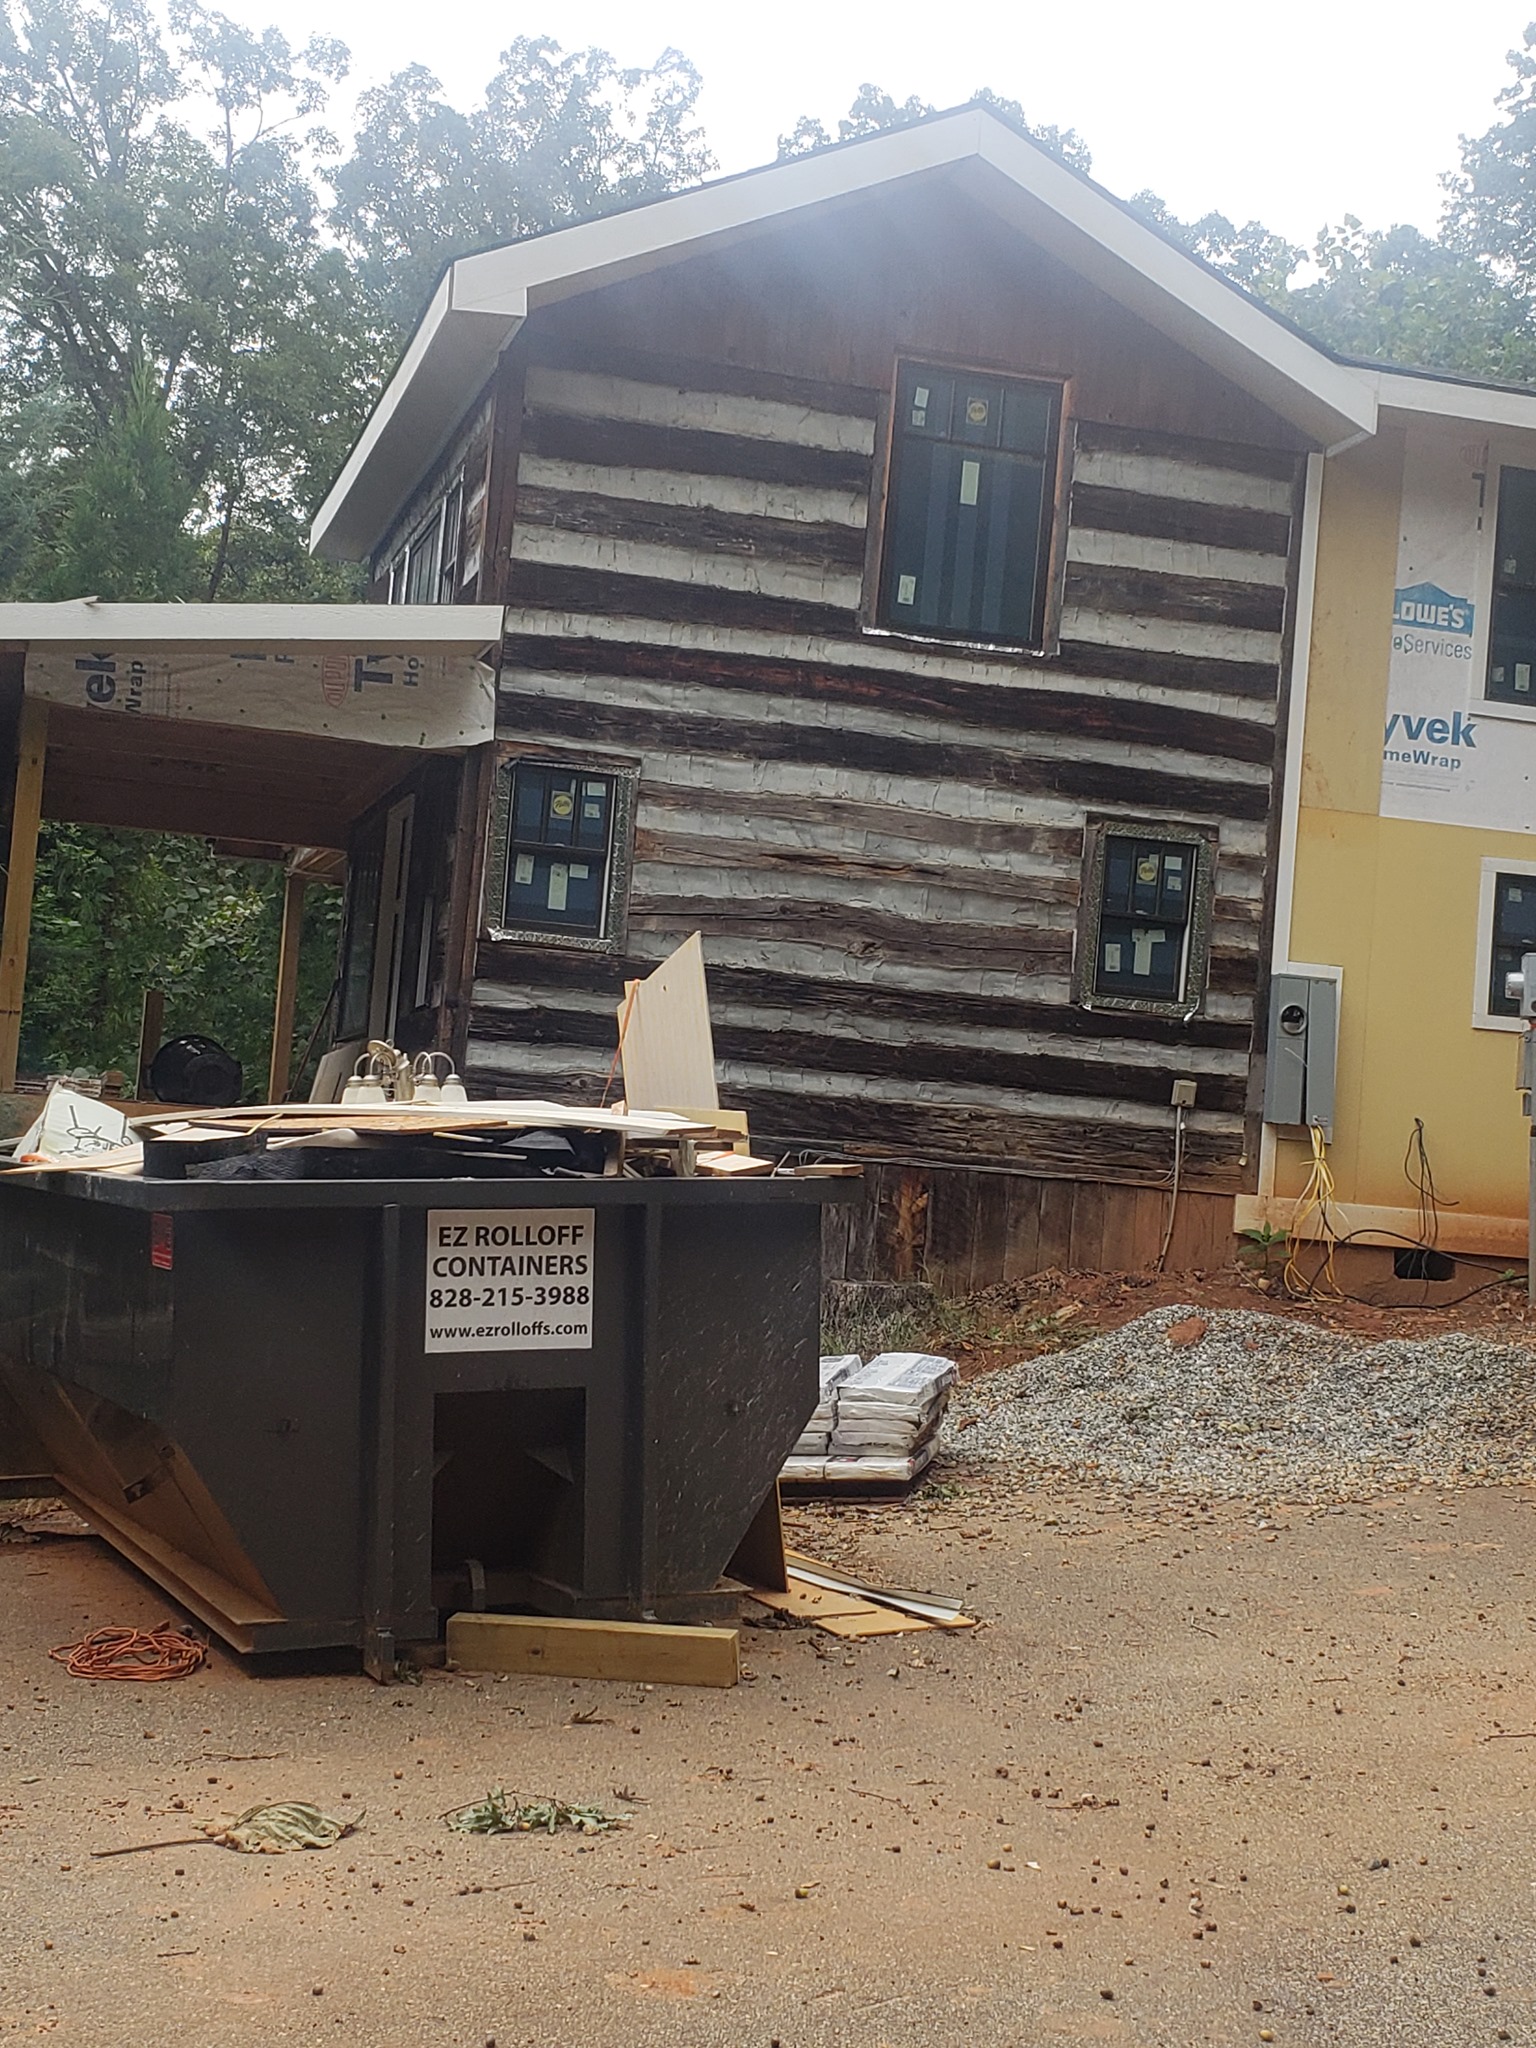 Dumpster Rental in Hendersonville NC